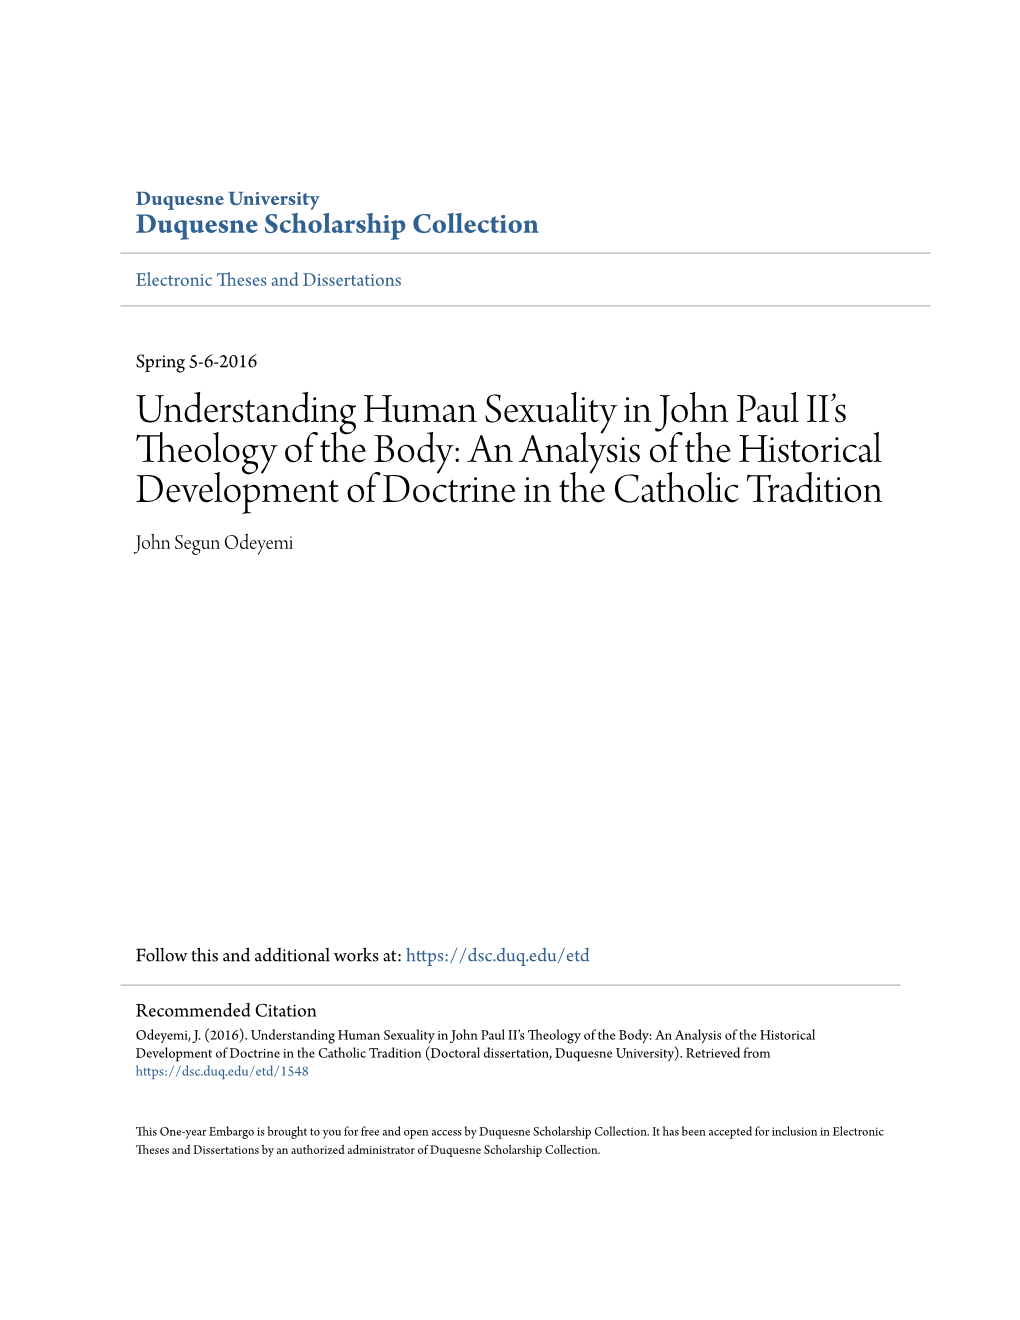 Understanding Human Sexuality in John Paul II's Theology of the Body